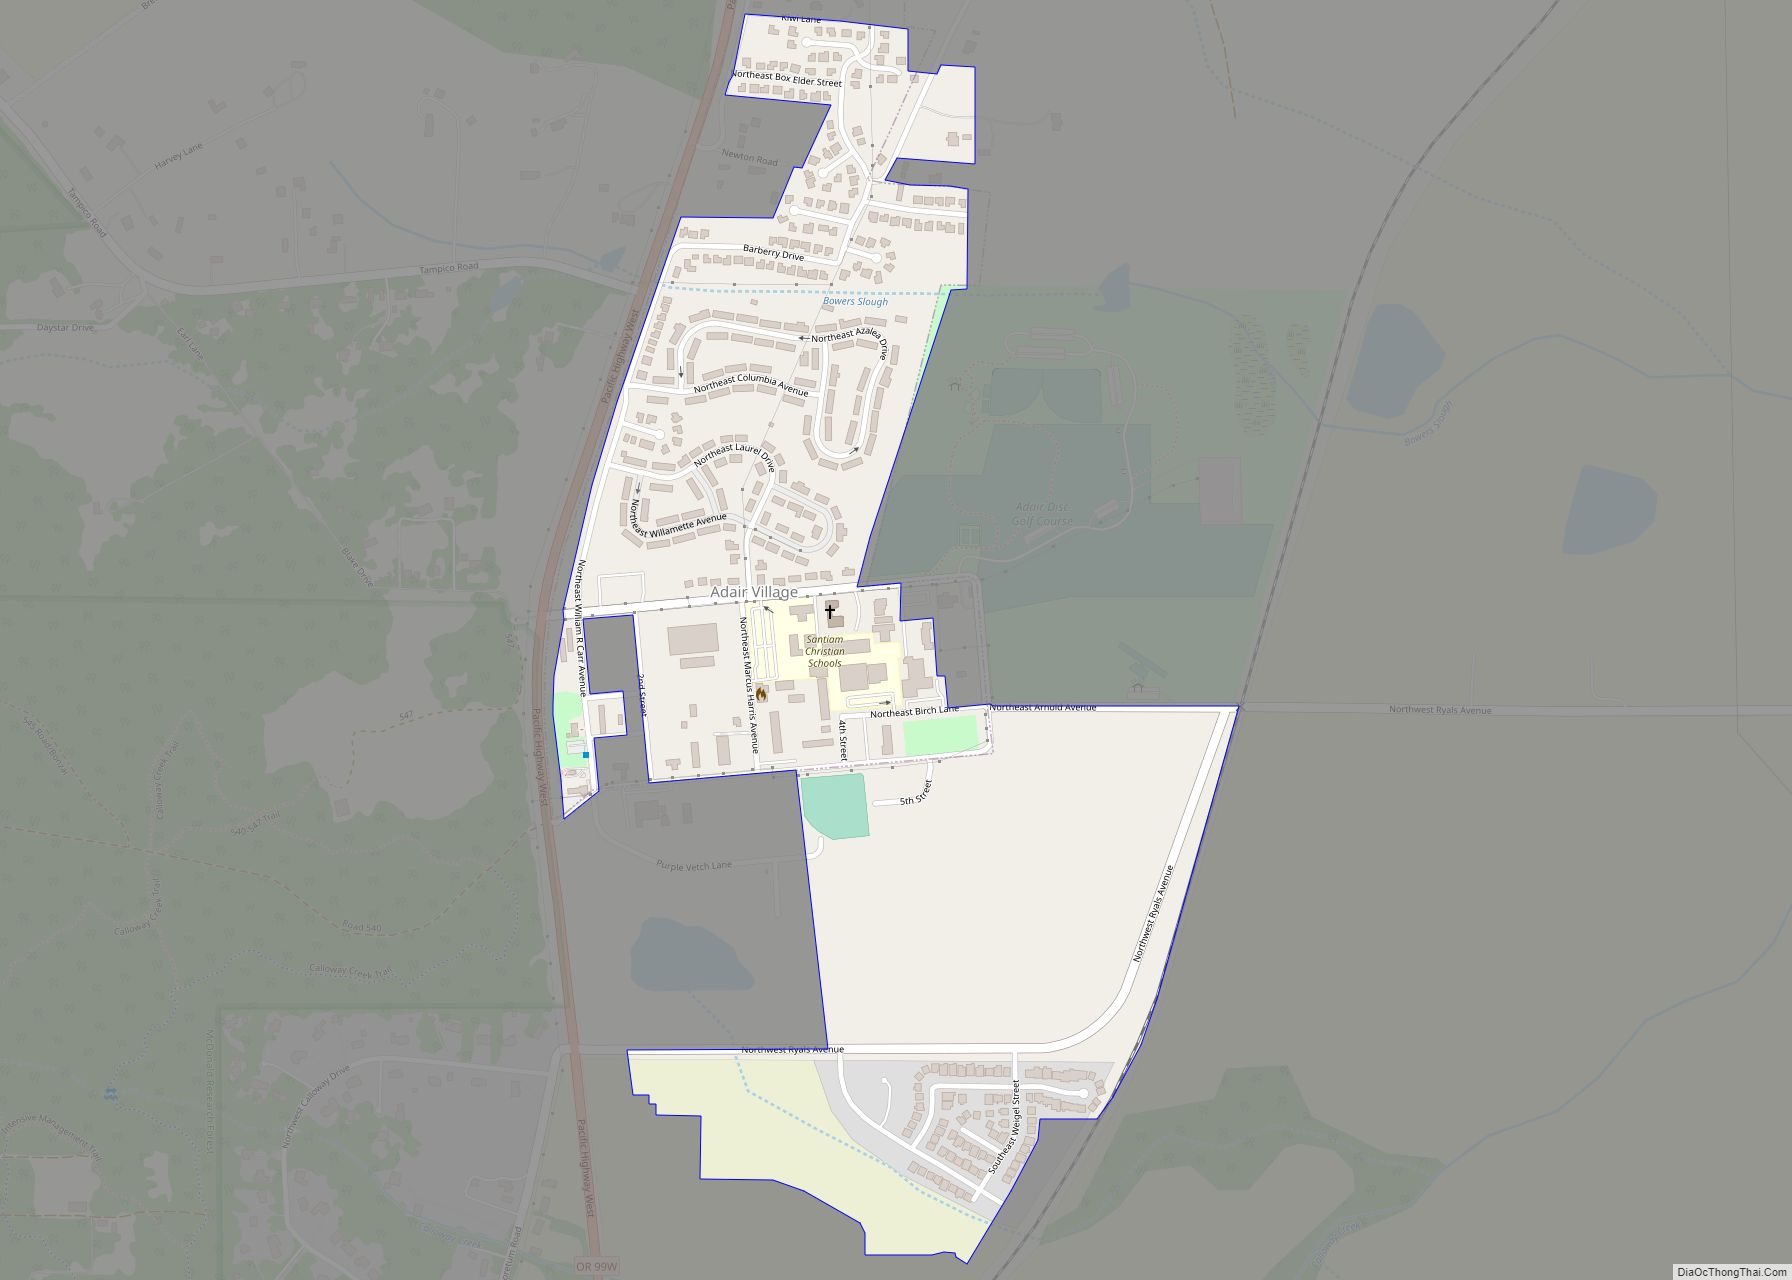 Map of Adair Village city